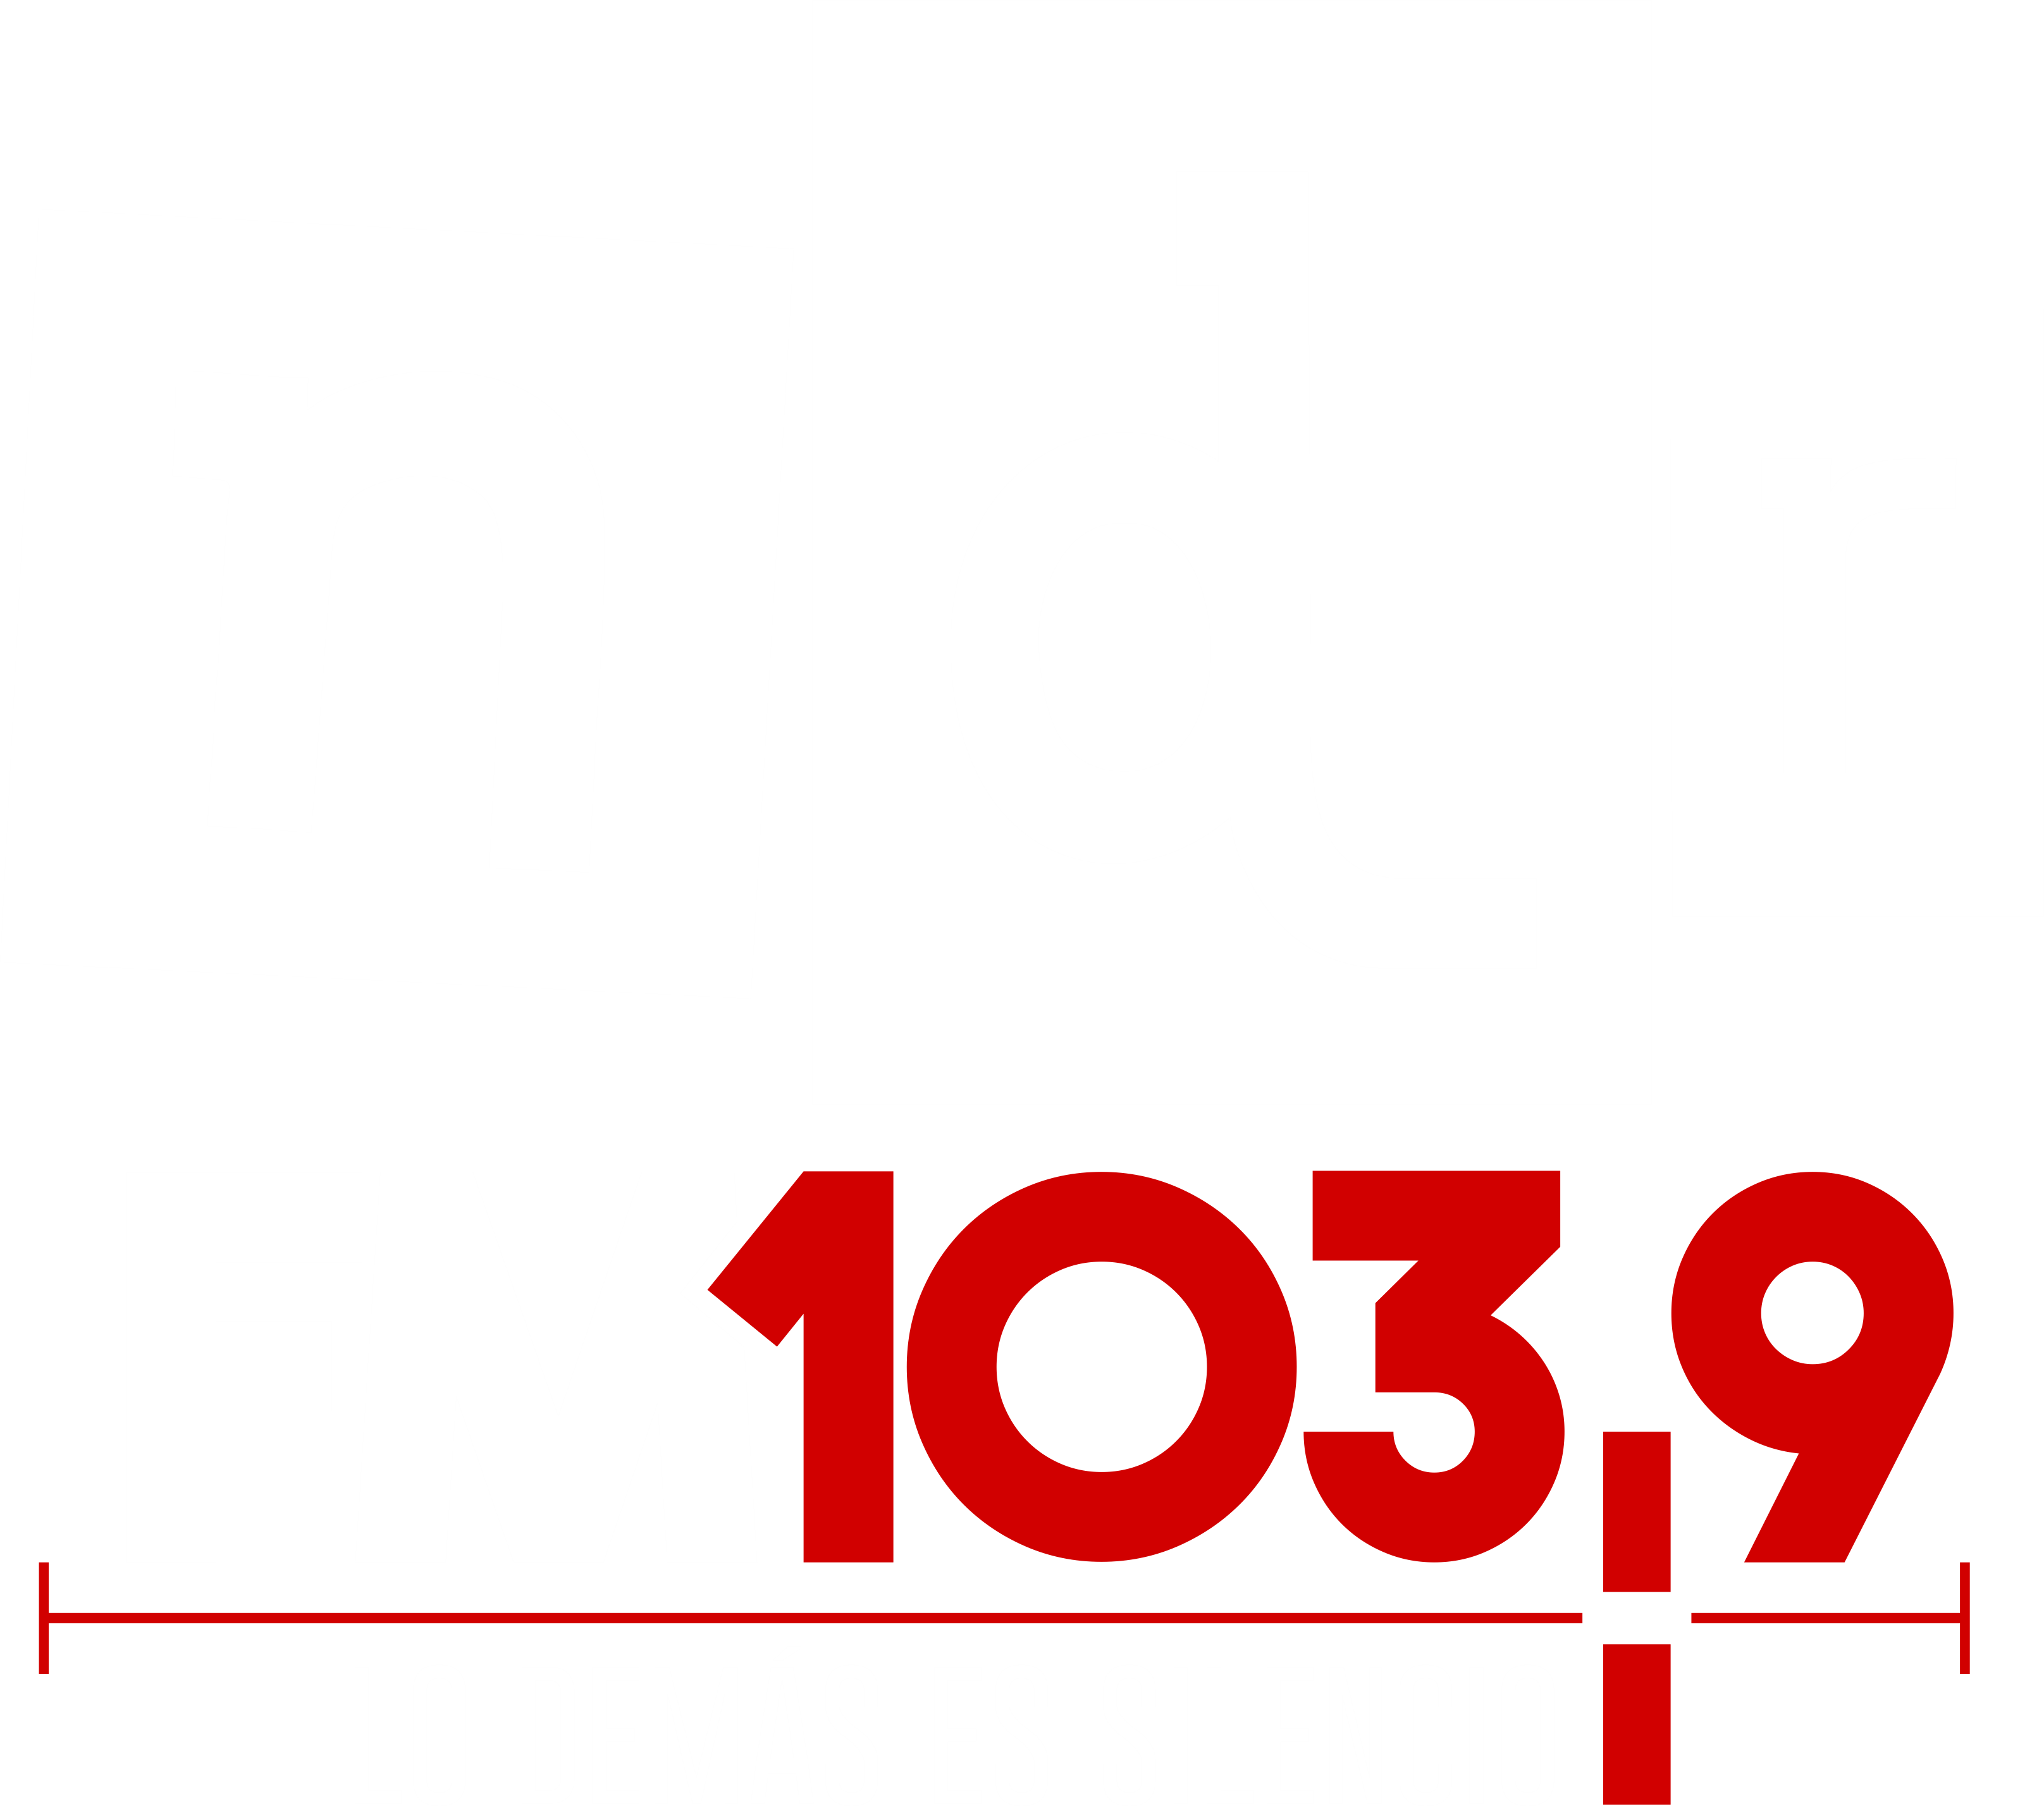 NdR Radio FM 103.9